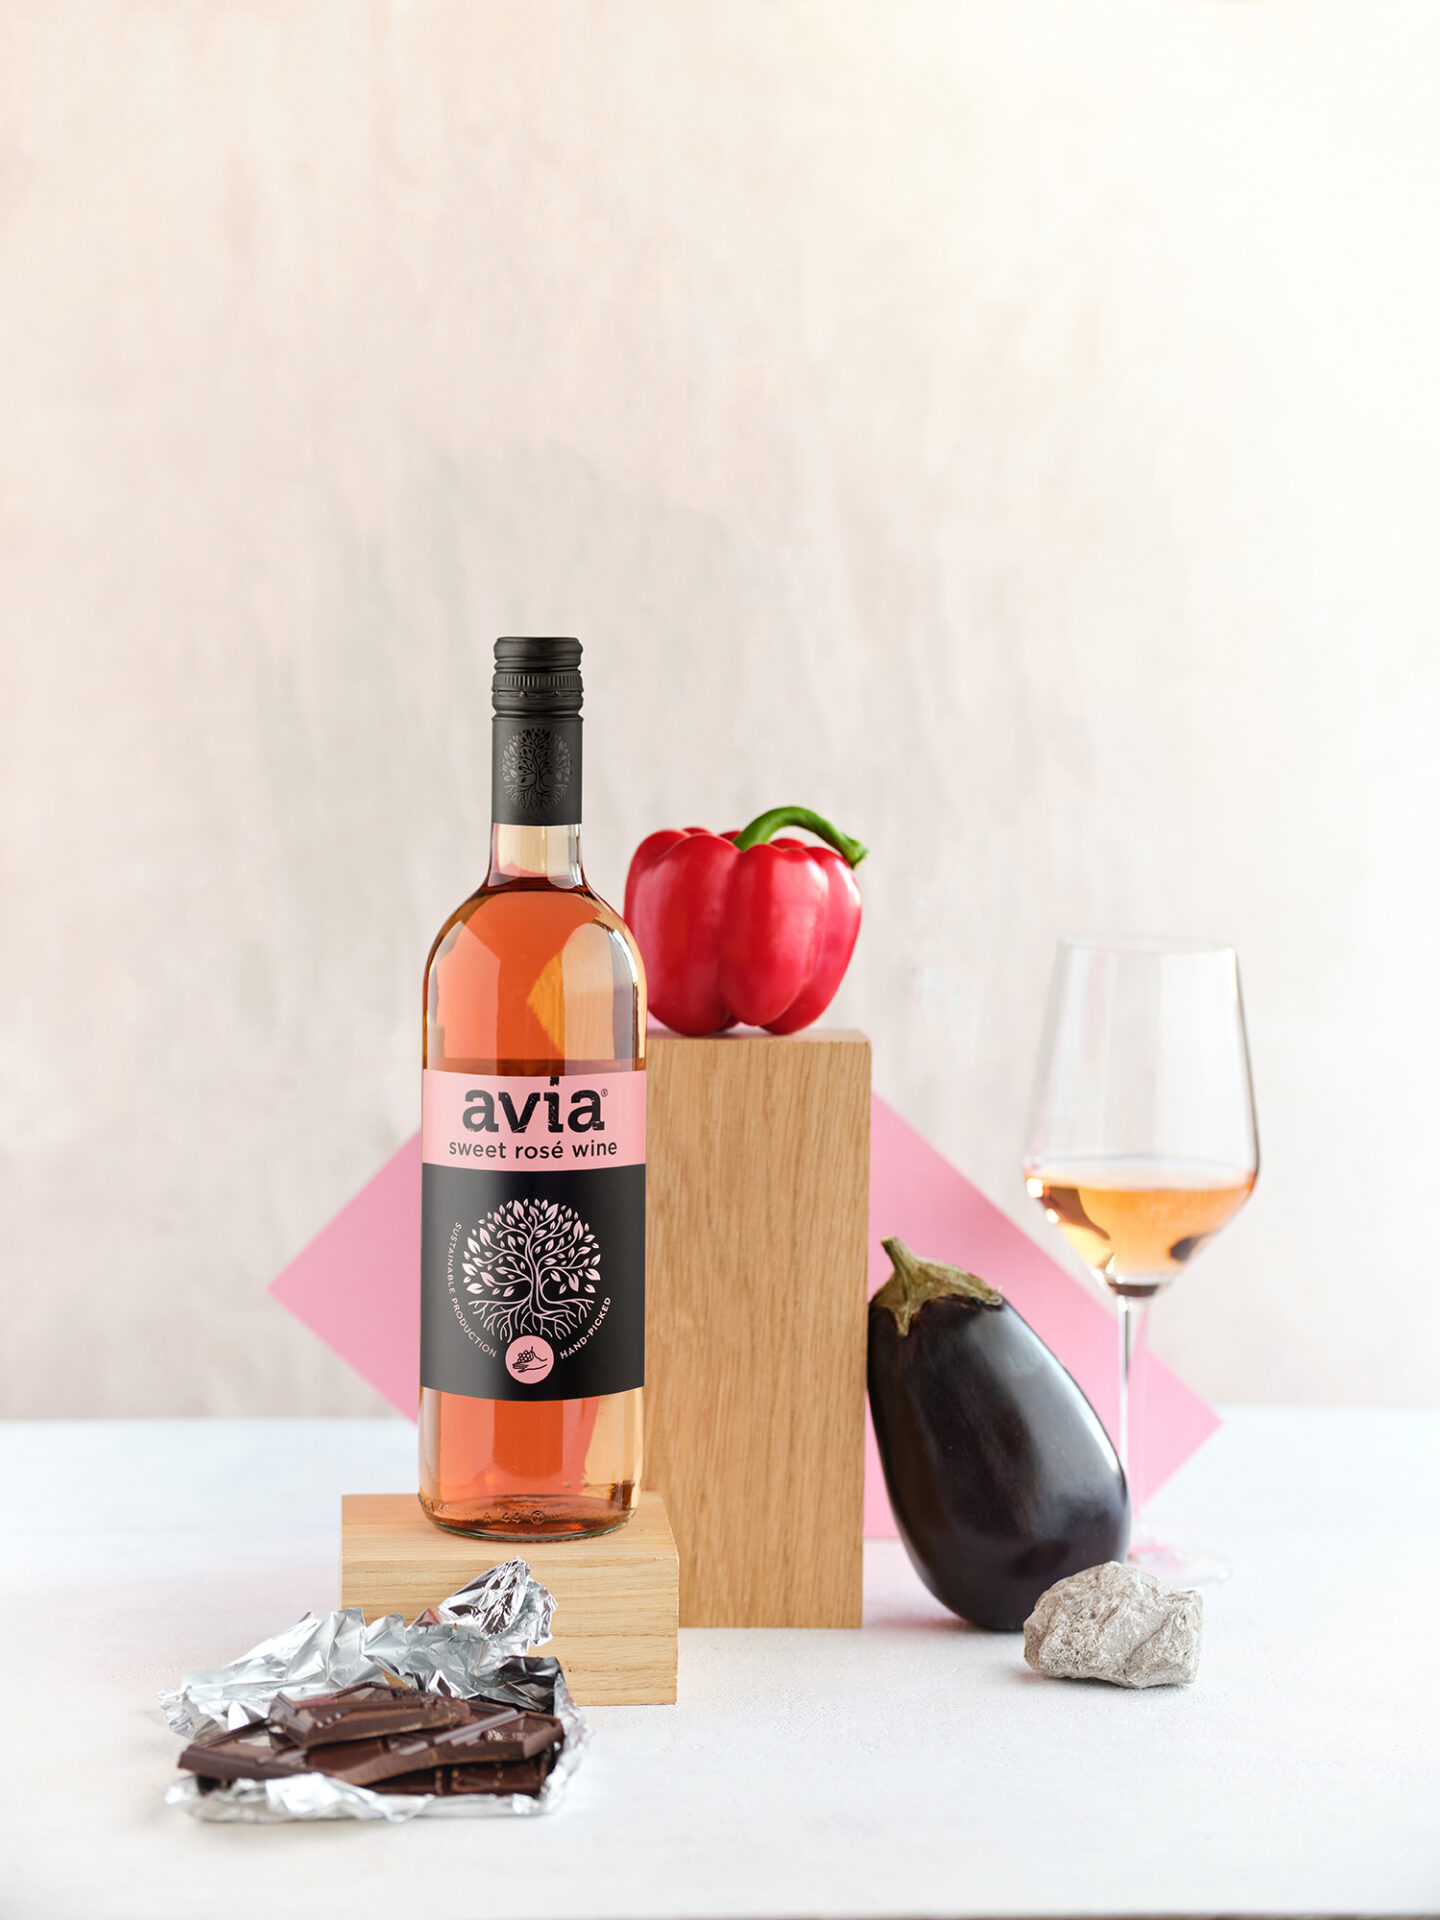 Avia sweet rose wine